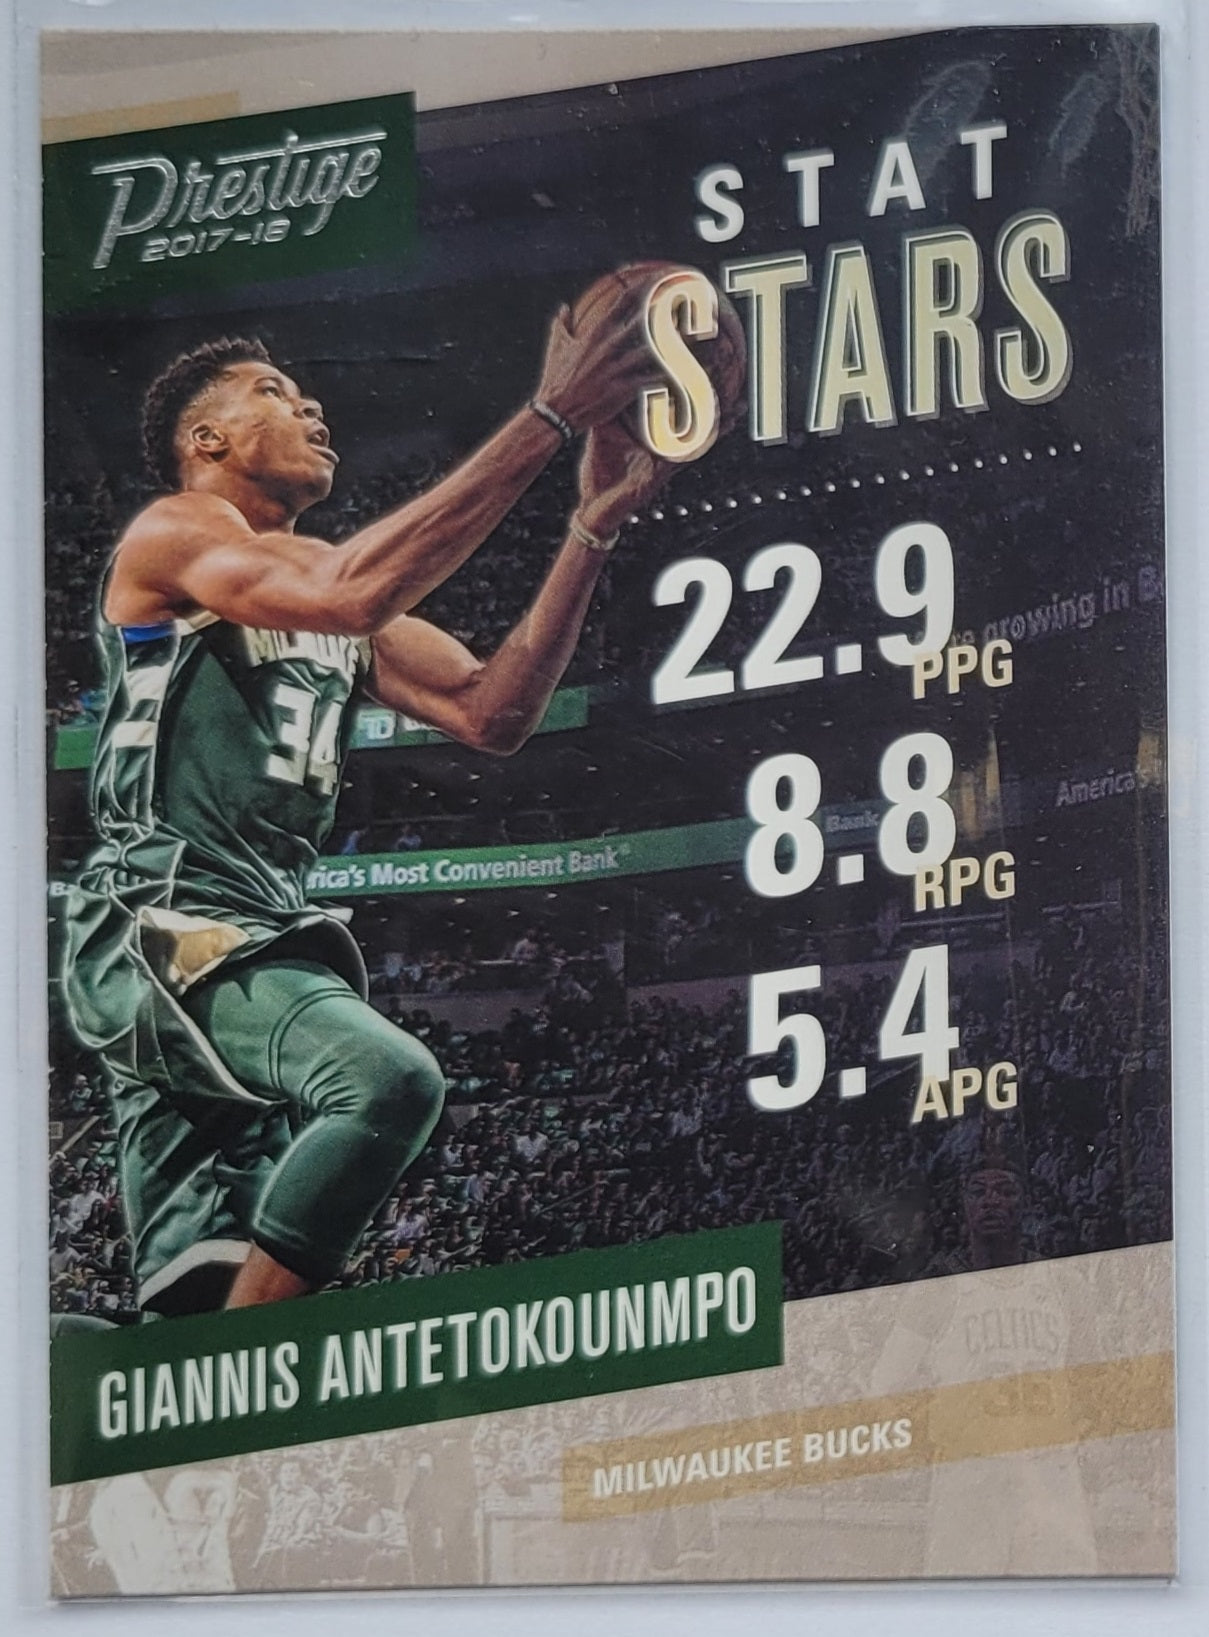 Giannis Antetokounmpo - 2017-18 Prestige Stat Stars #2